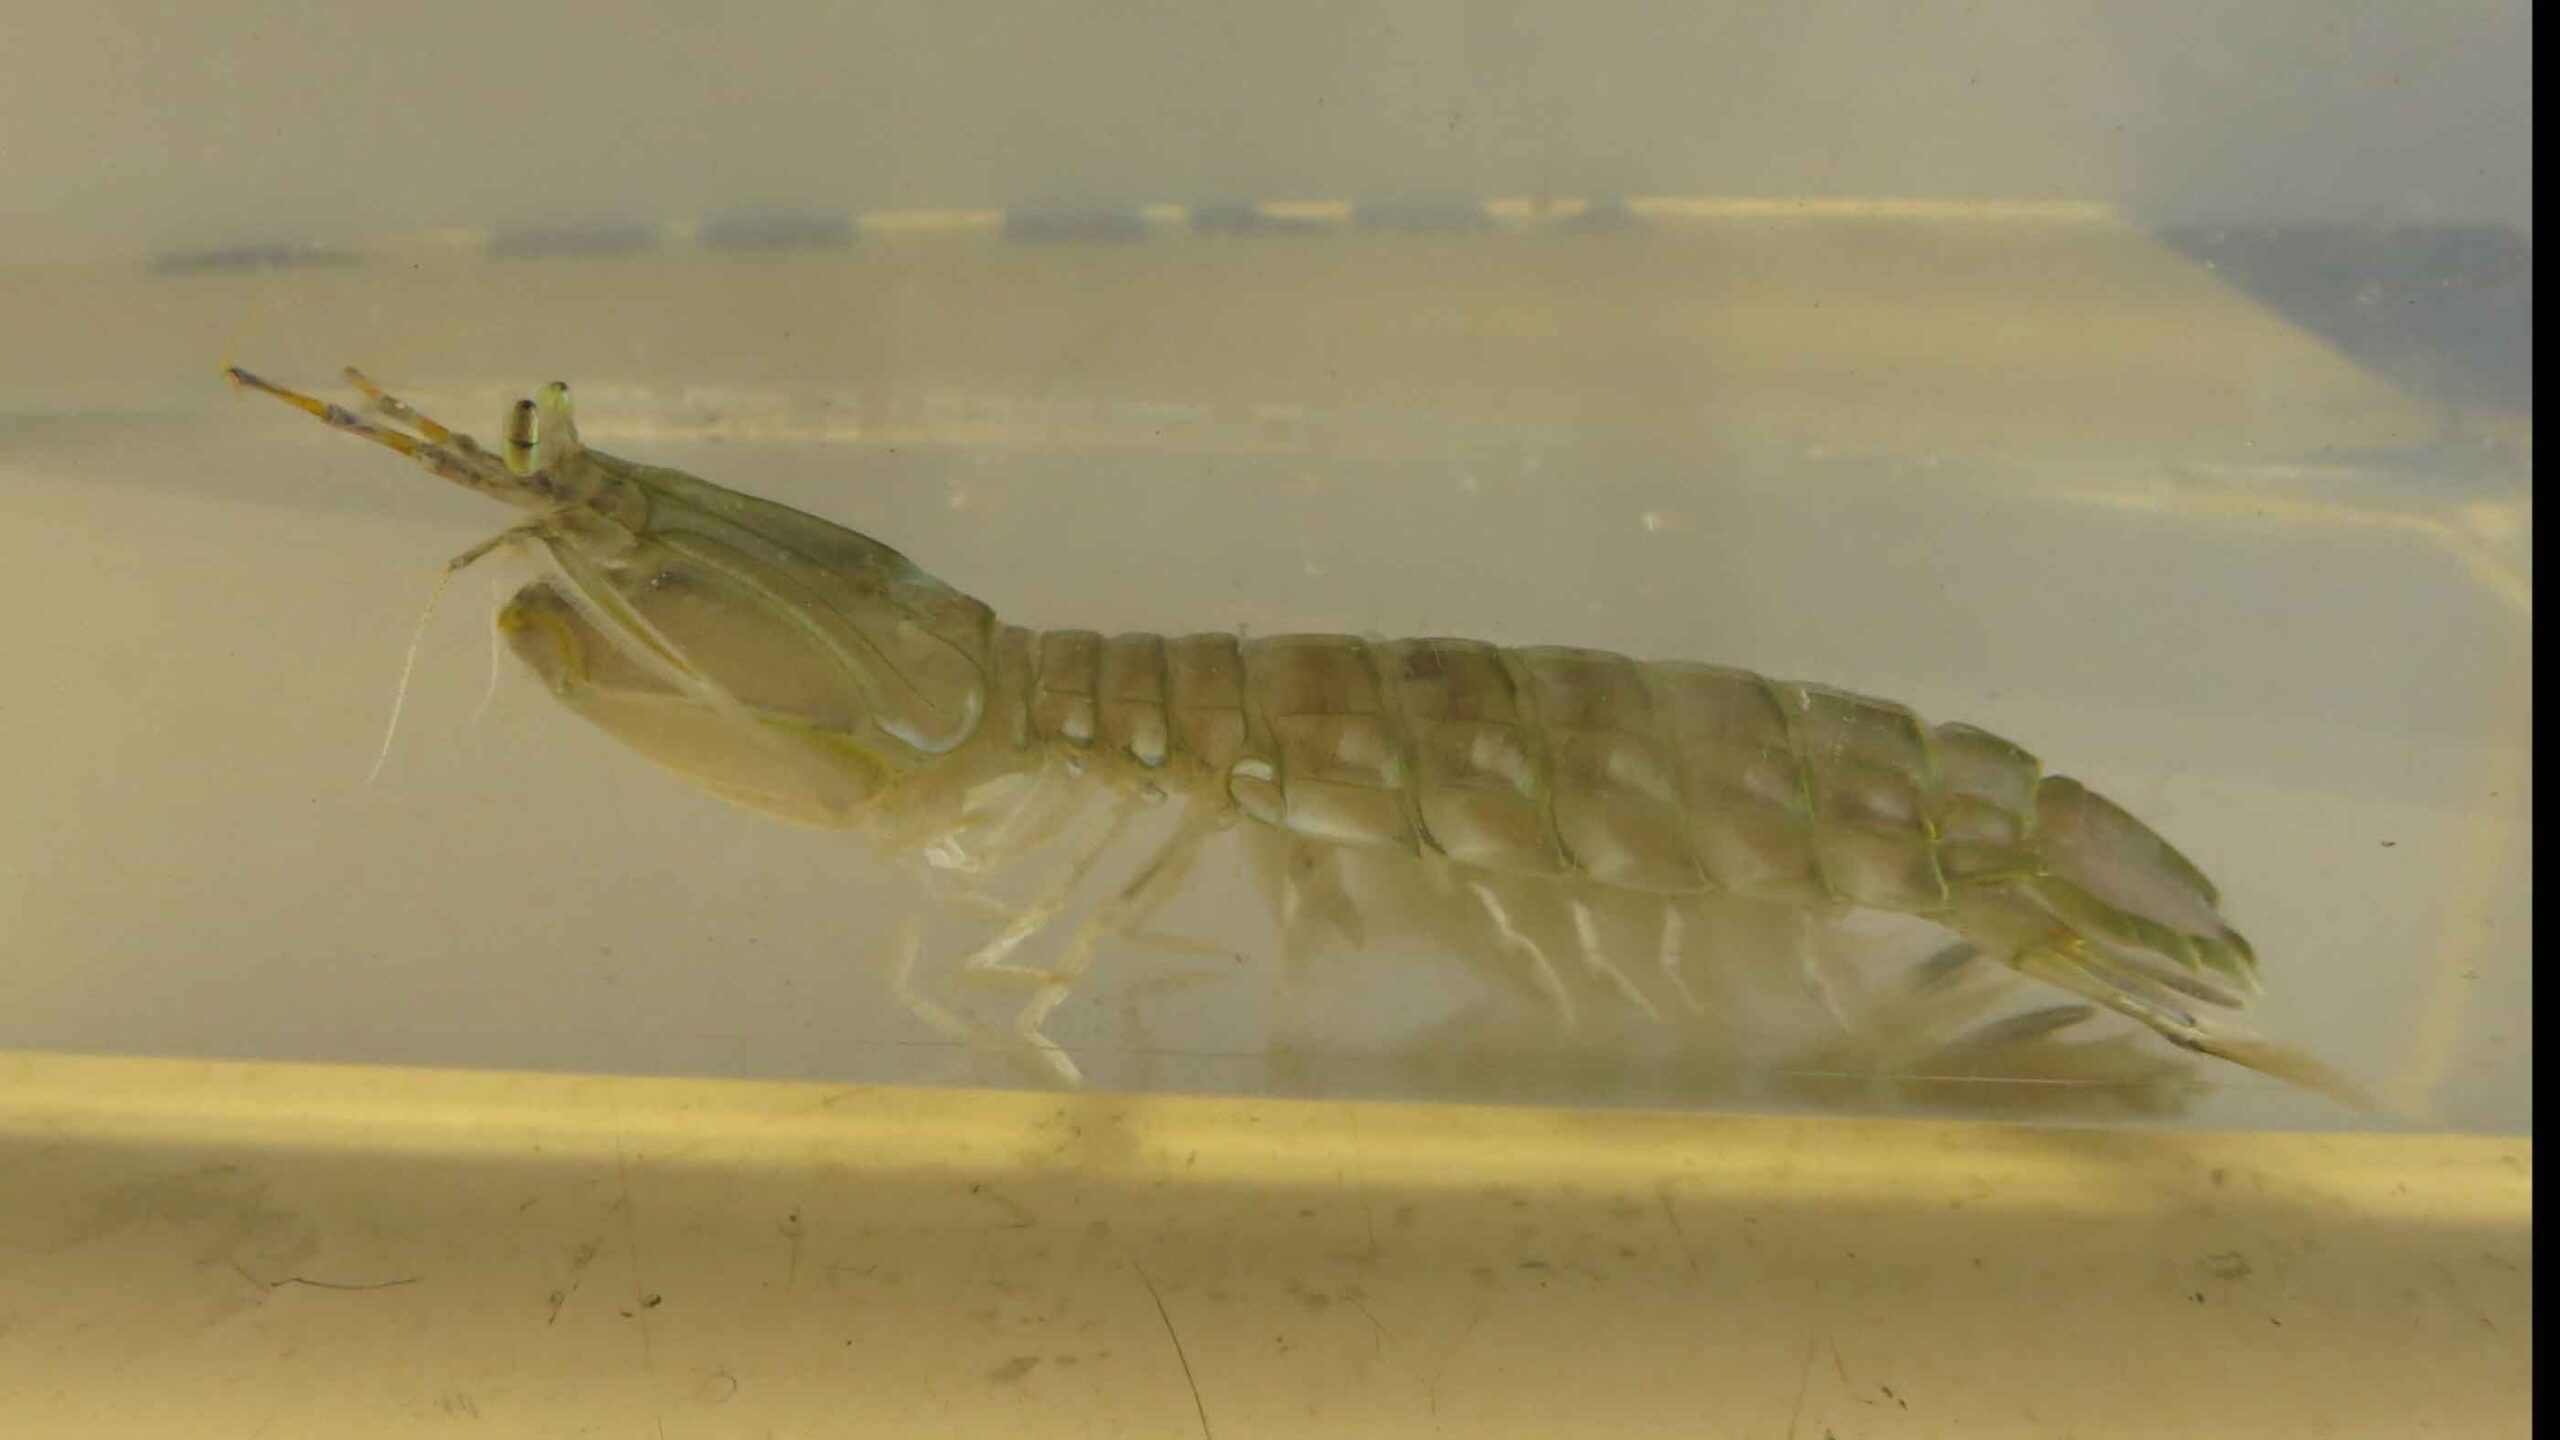 A long mantis shrimp in its tank